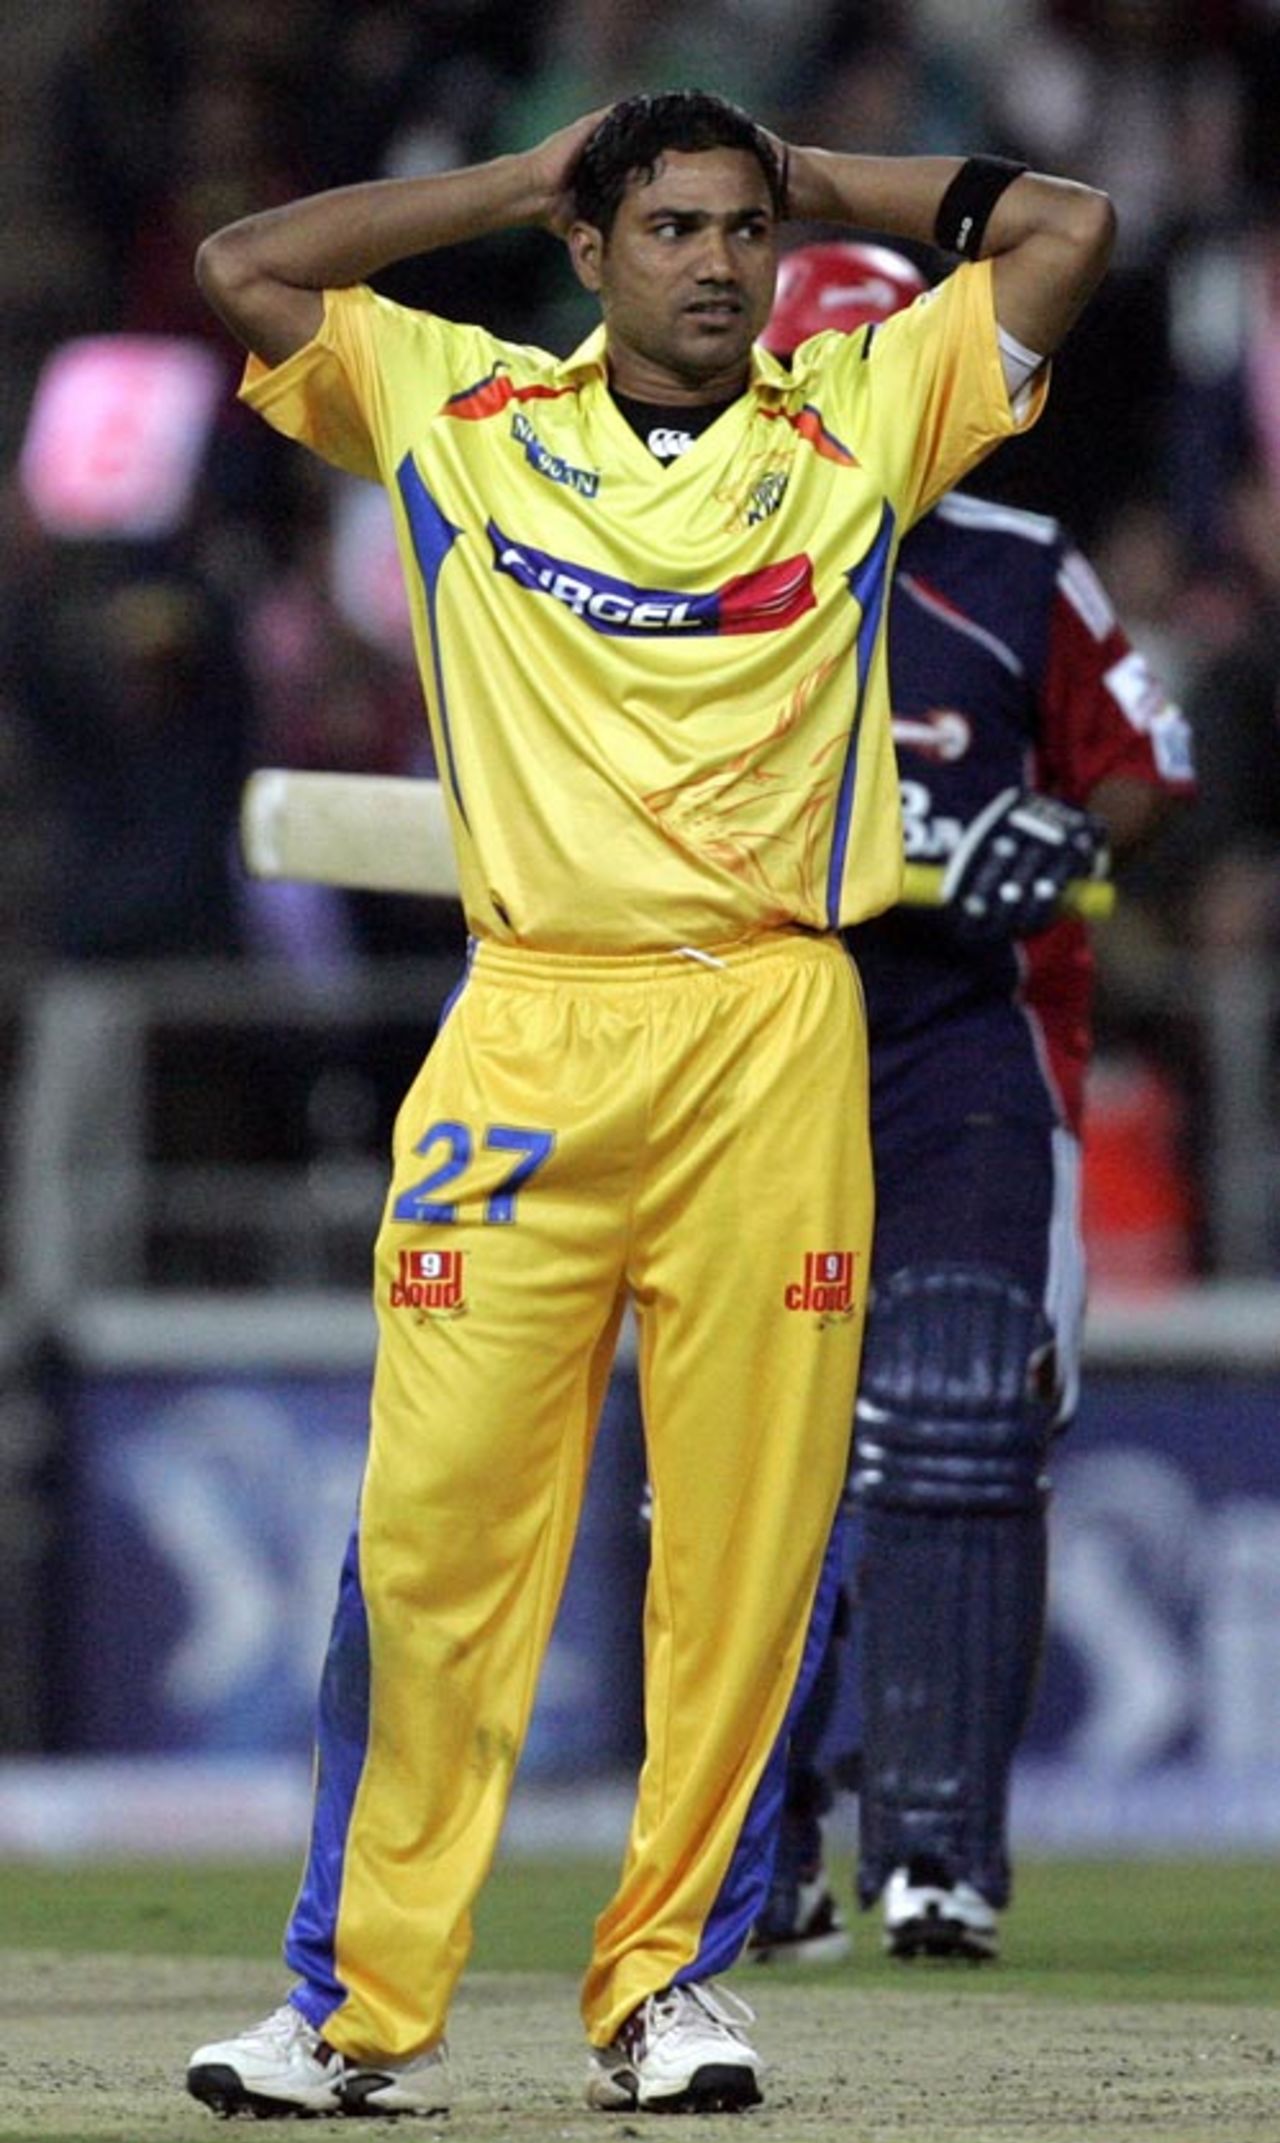 Shadab Jakati finished with 4 for 24, Chennai Super Kings v Delhi Daredevils, IPL, 26th match, Johannesburg, May 2, 2009